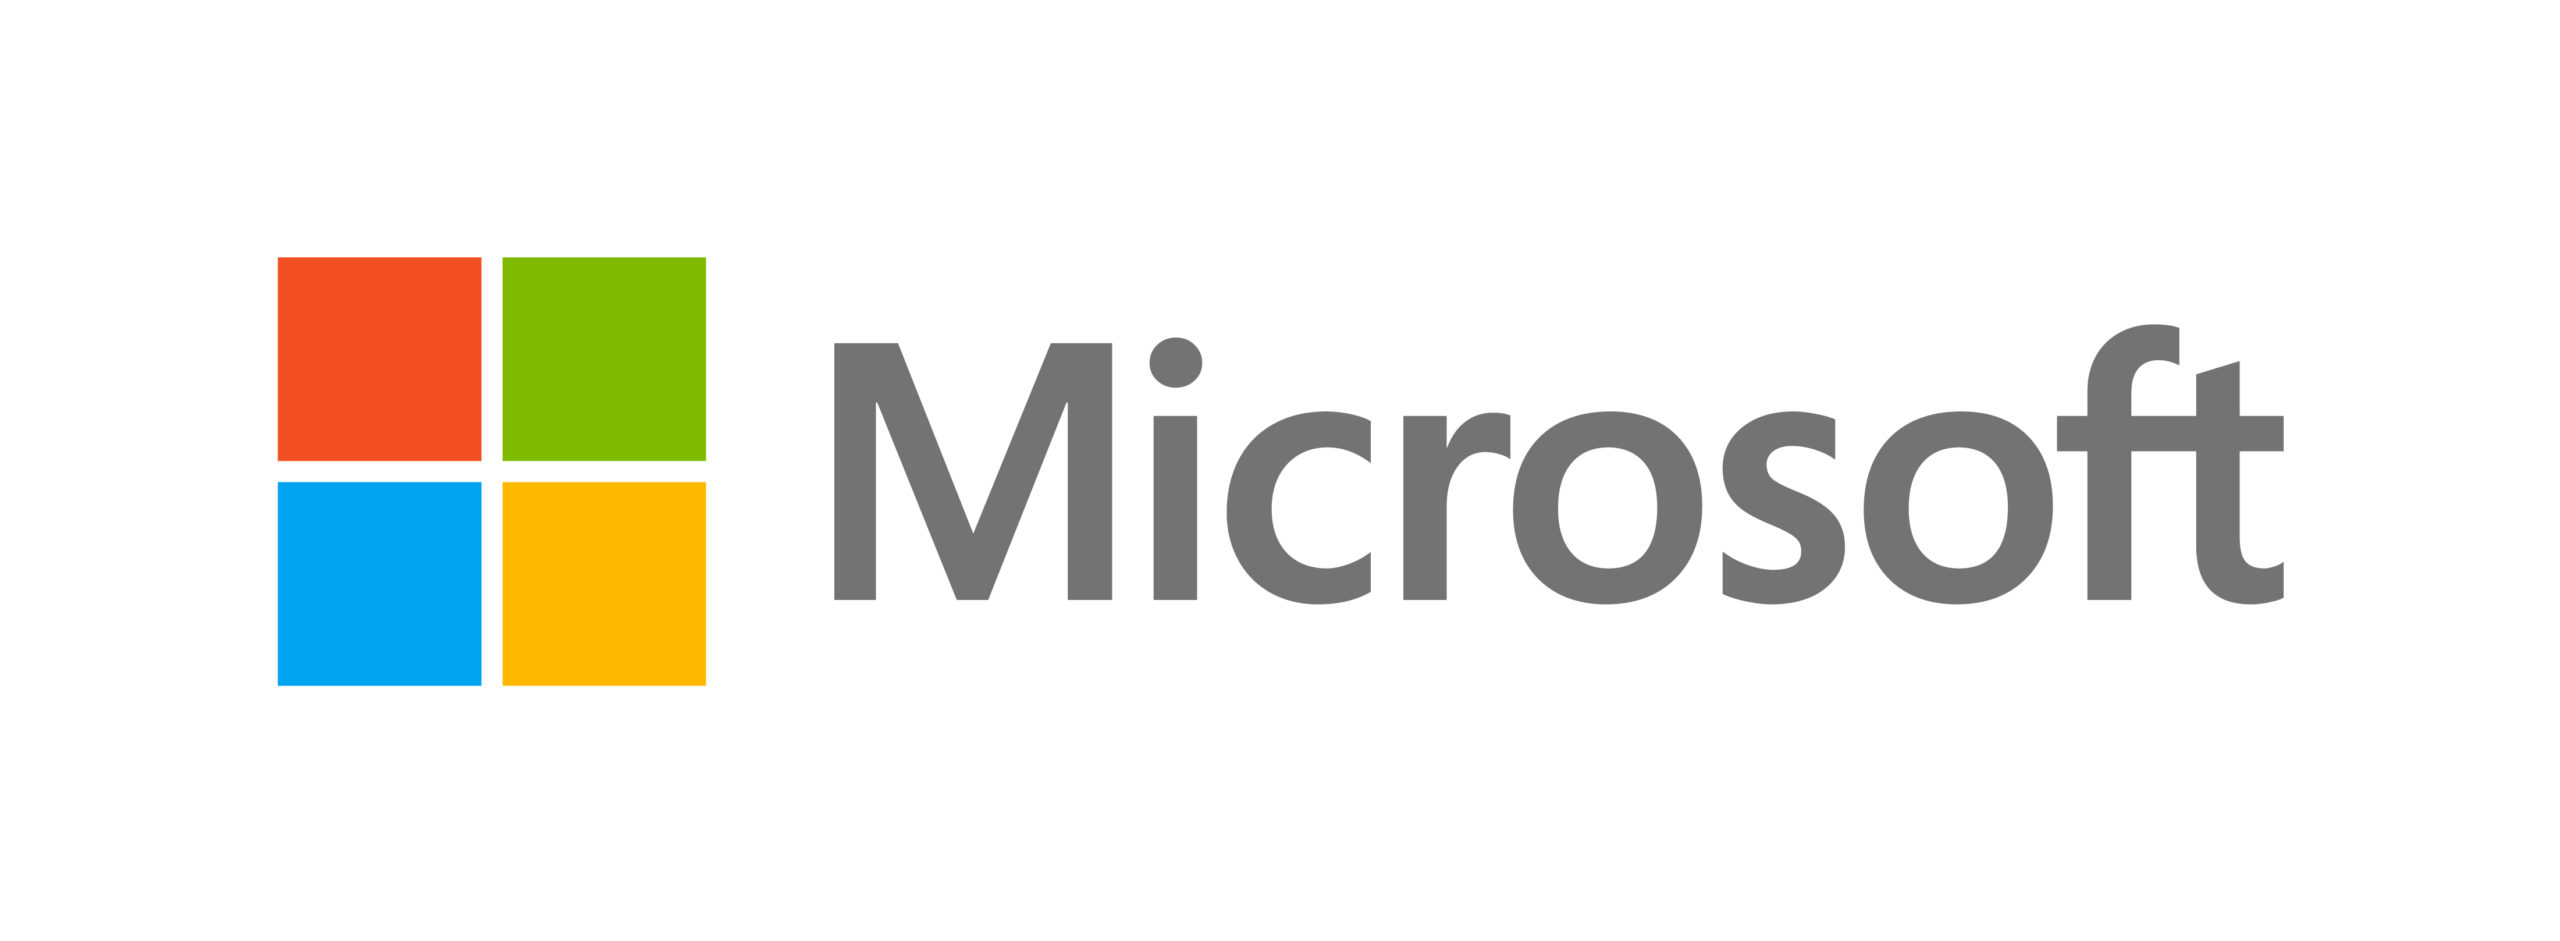 8867.Microsoft_5F00_Logo_2D00_for_2D00_screen-scaled-1.jpg